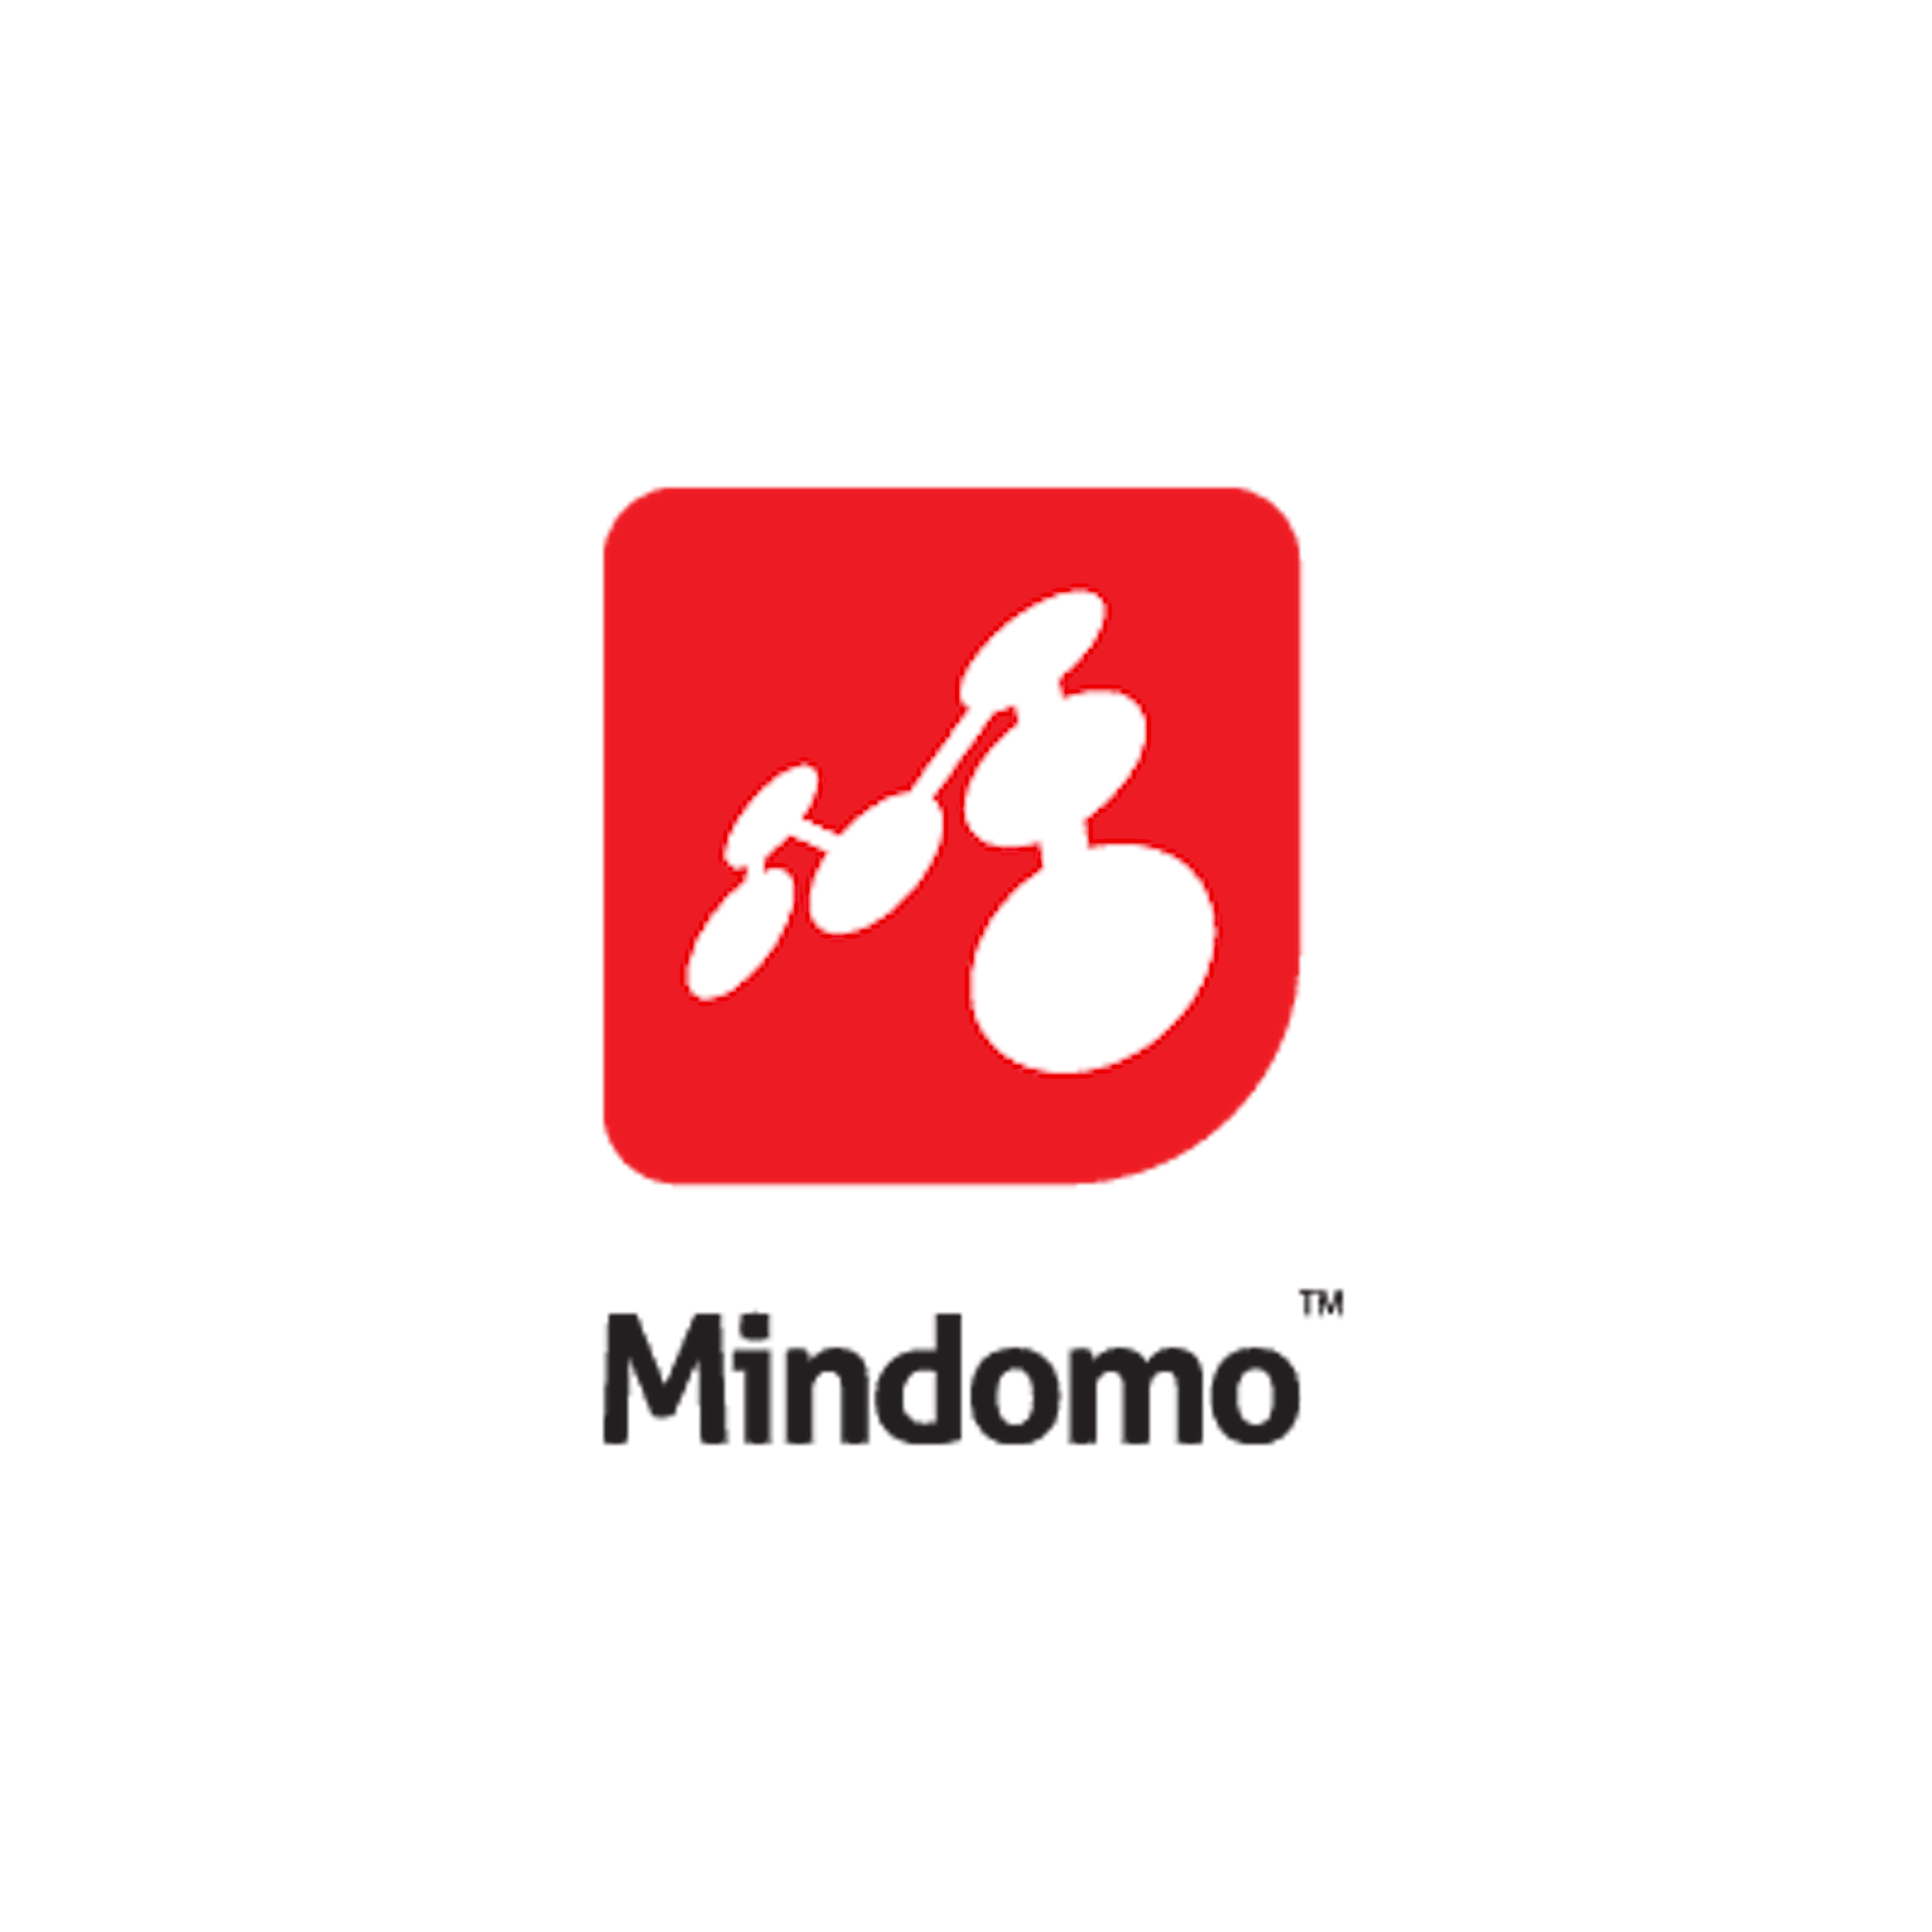 Mindomo Logo